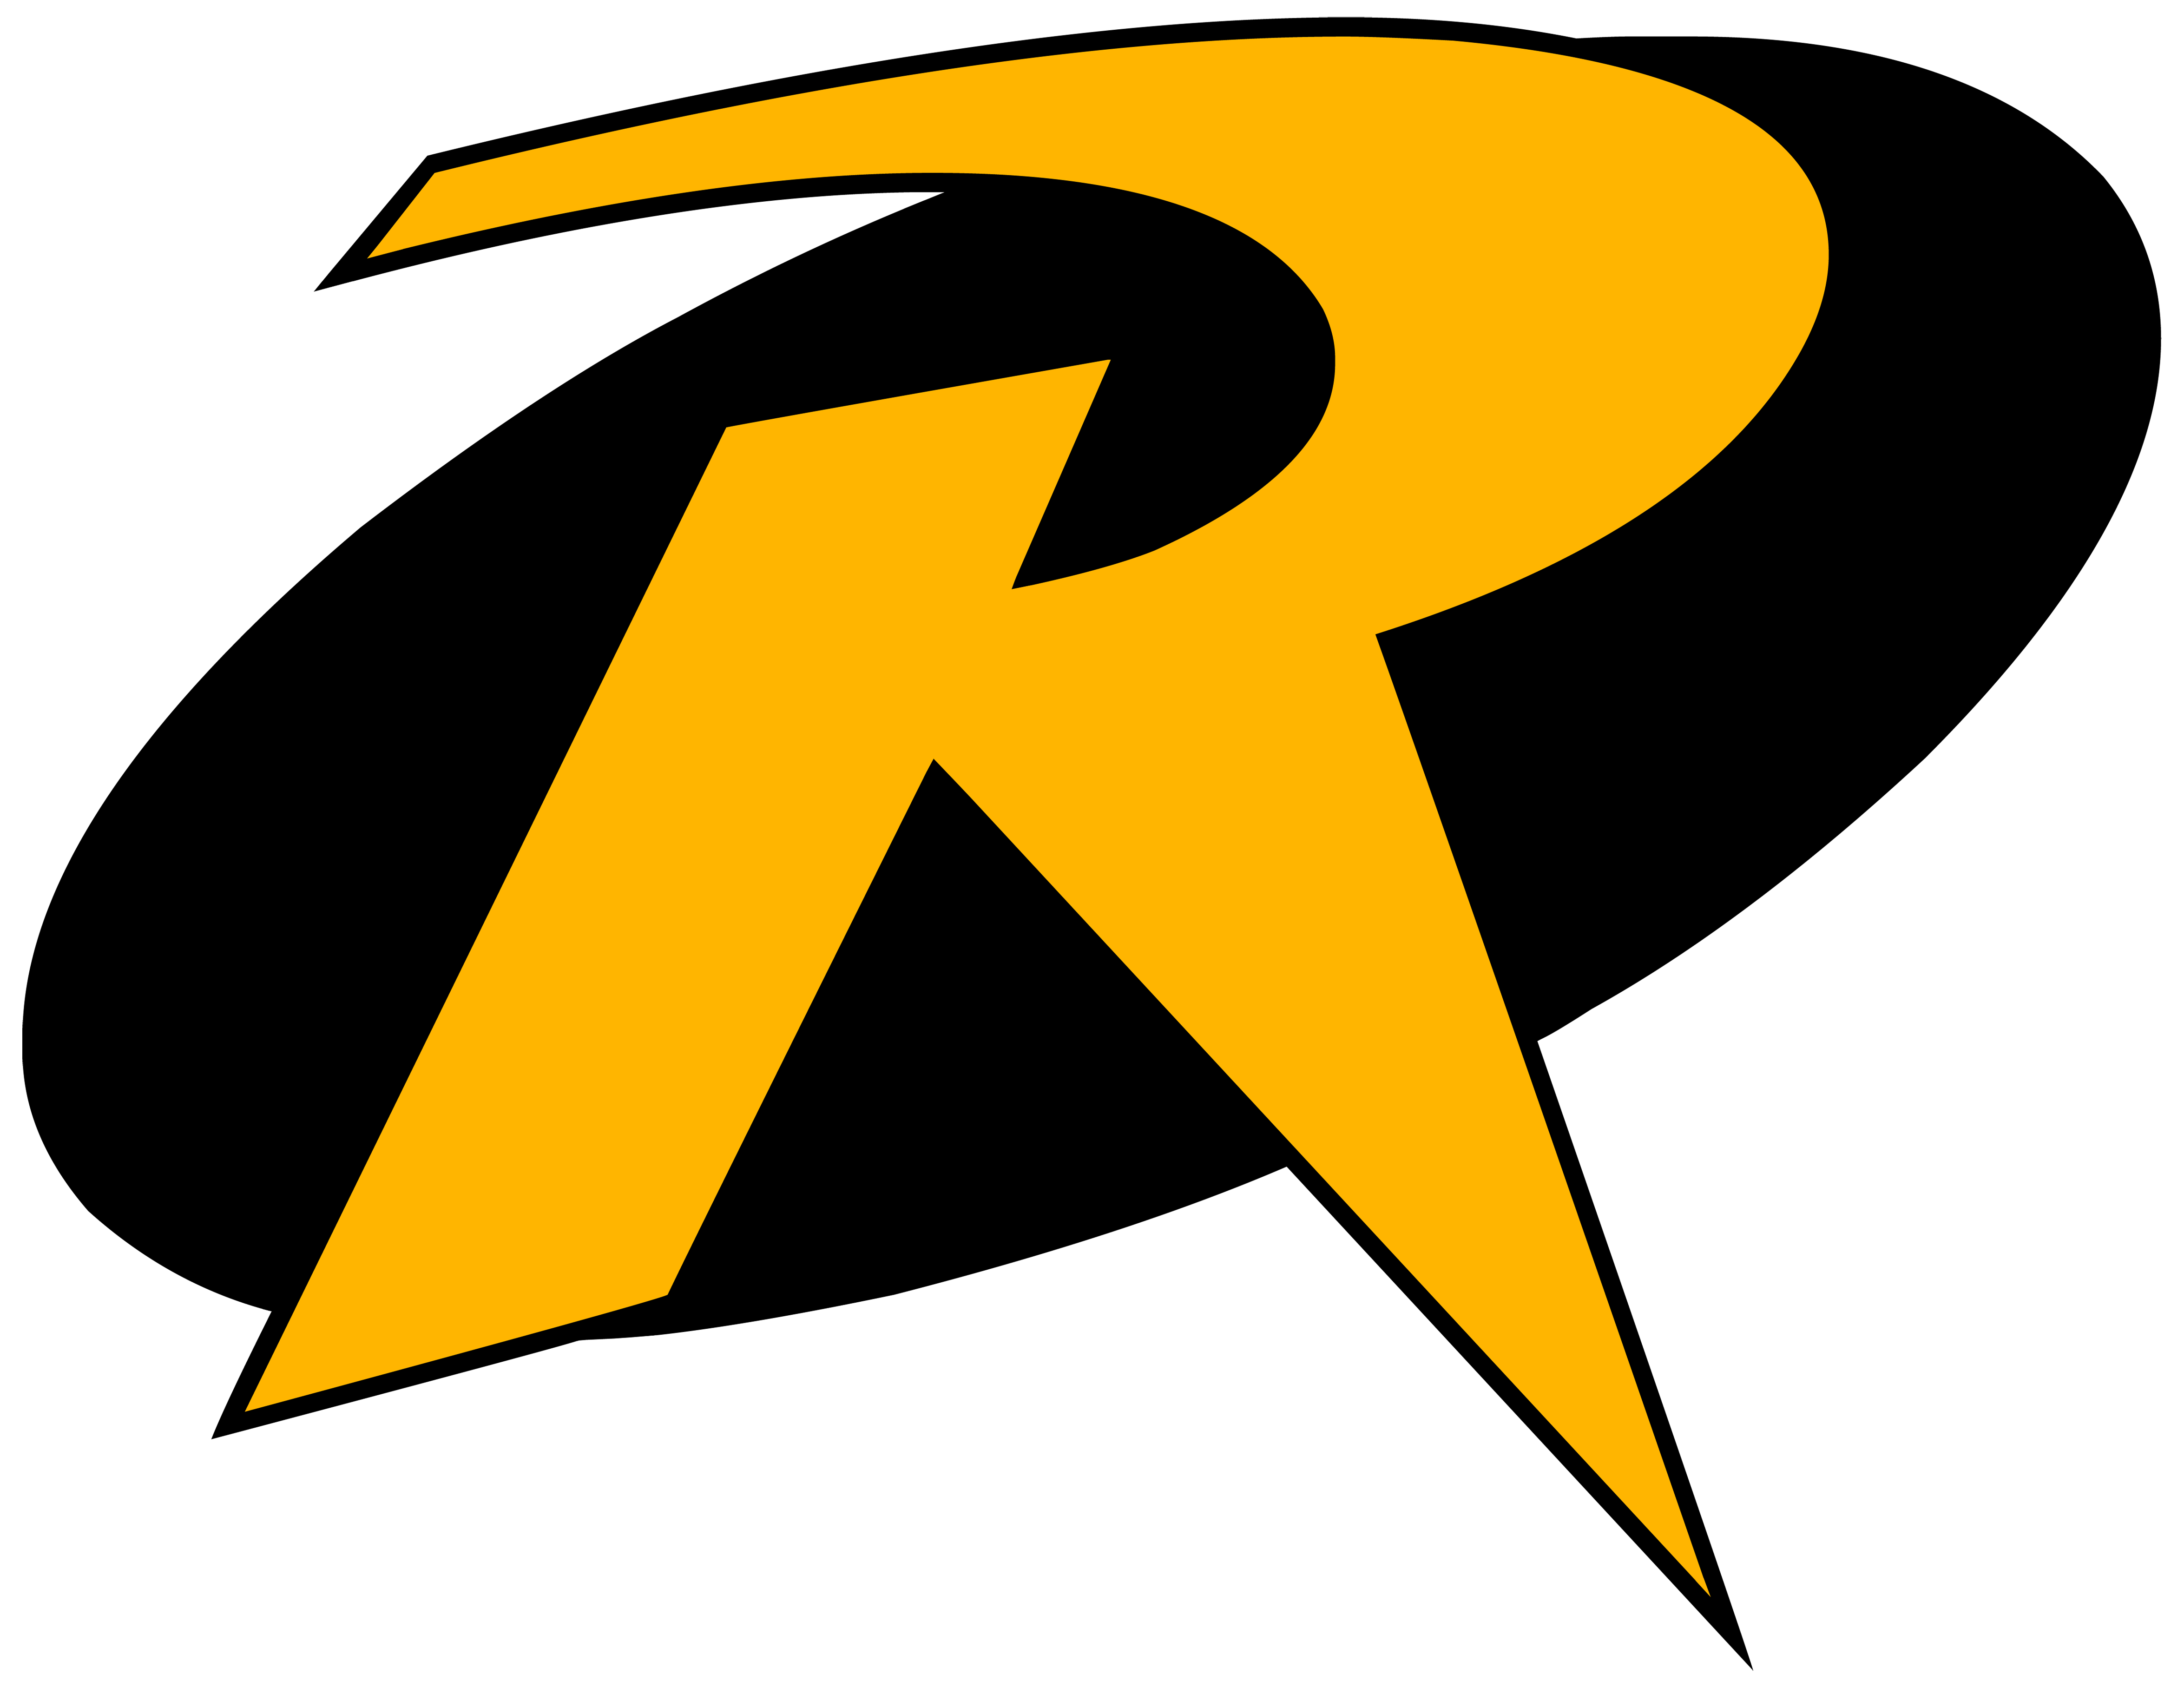 Robin Png Logo - Free Transparent PNG Logos